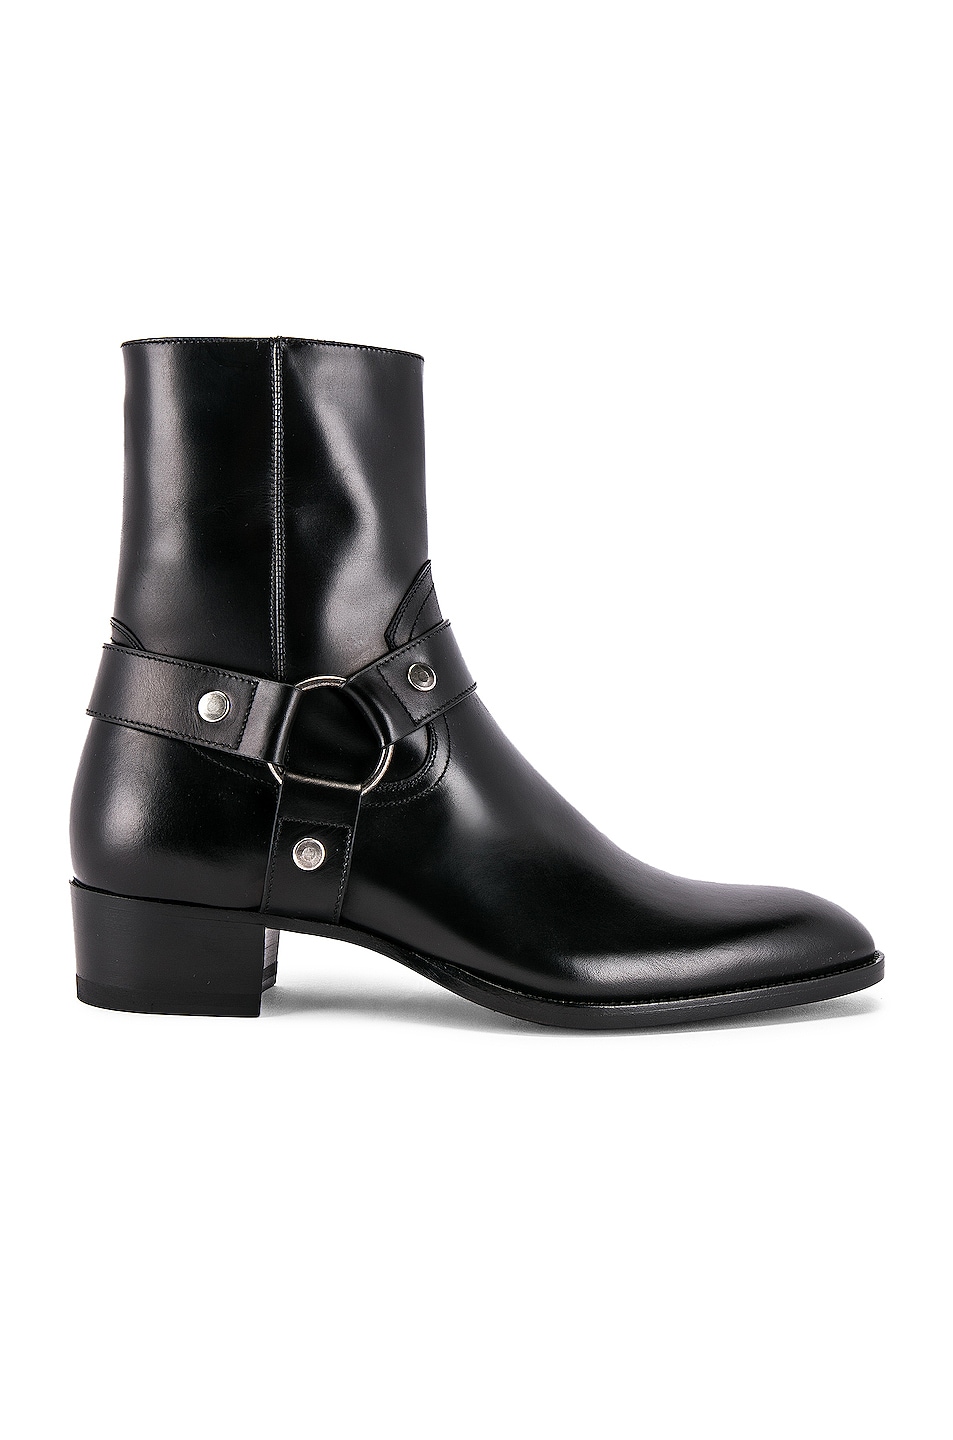 Saint Laurent Wyatt Leather Harness Boots in Black | FWRD